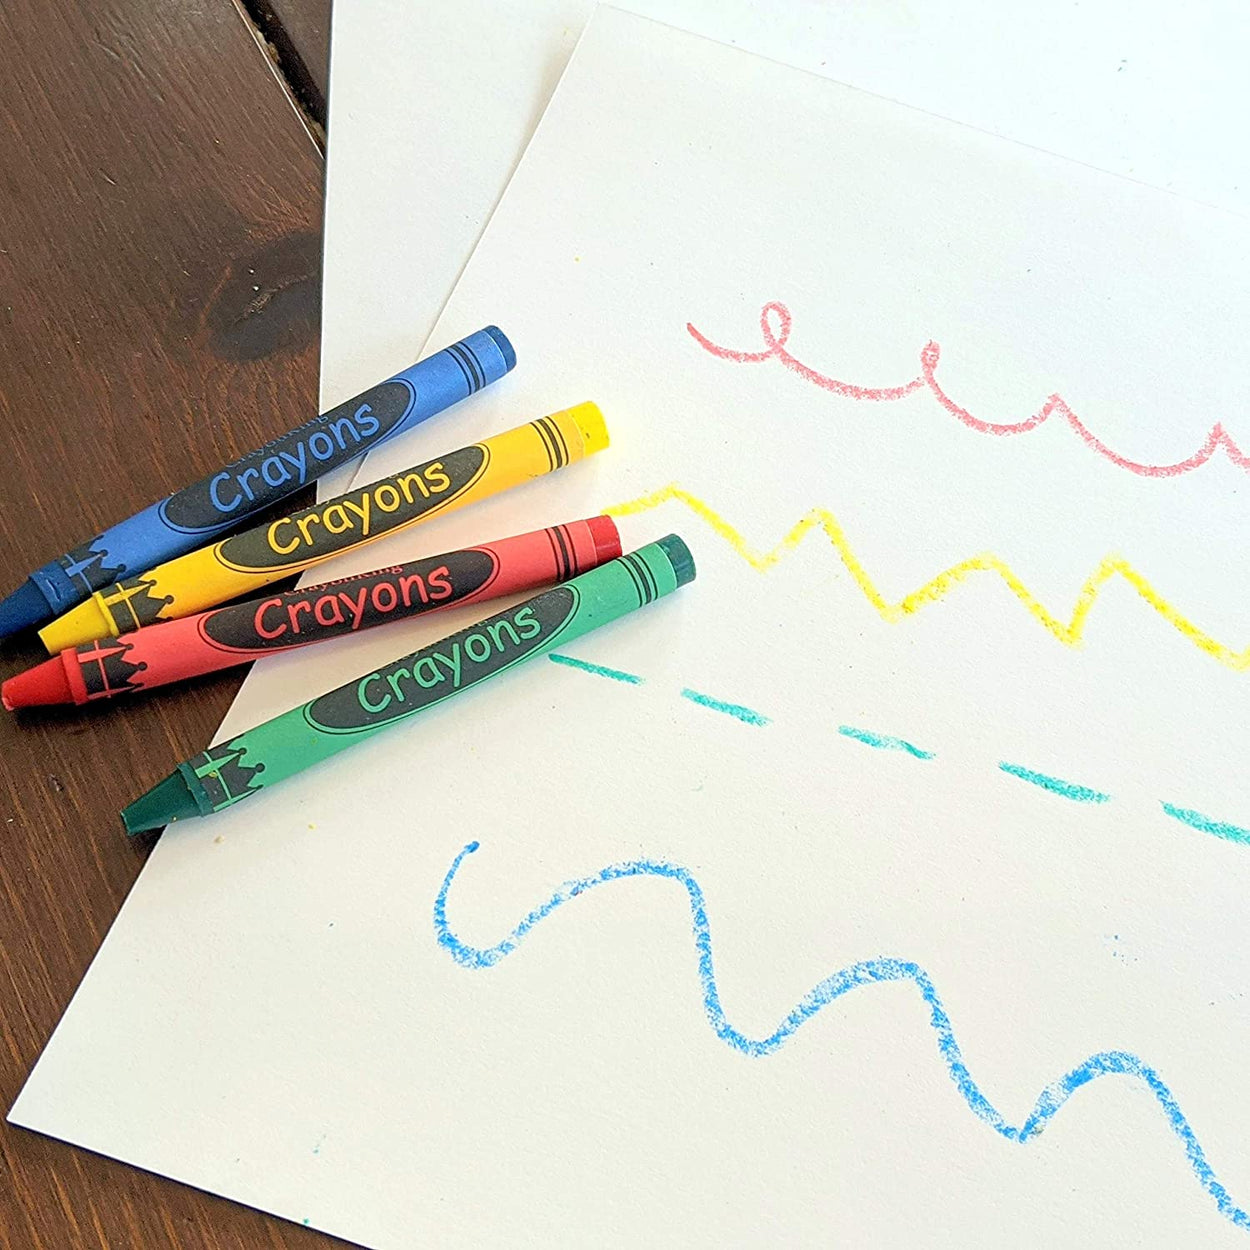 4 Ct. Global Standard Cellophane Crayons